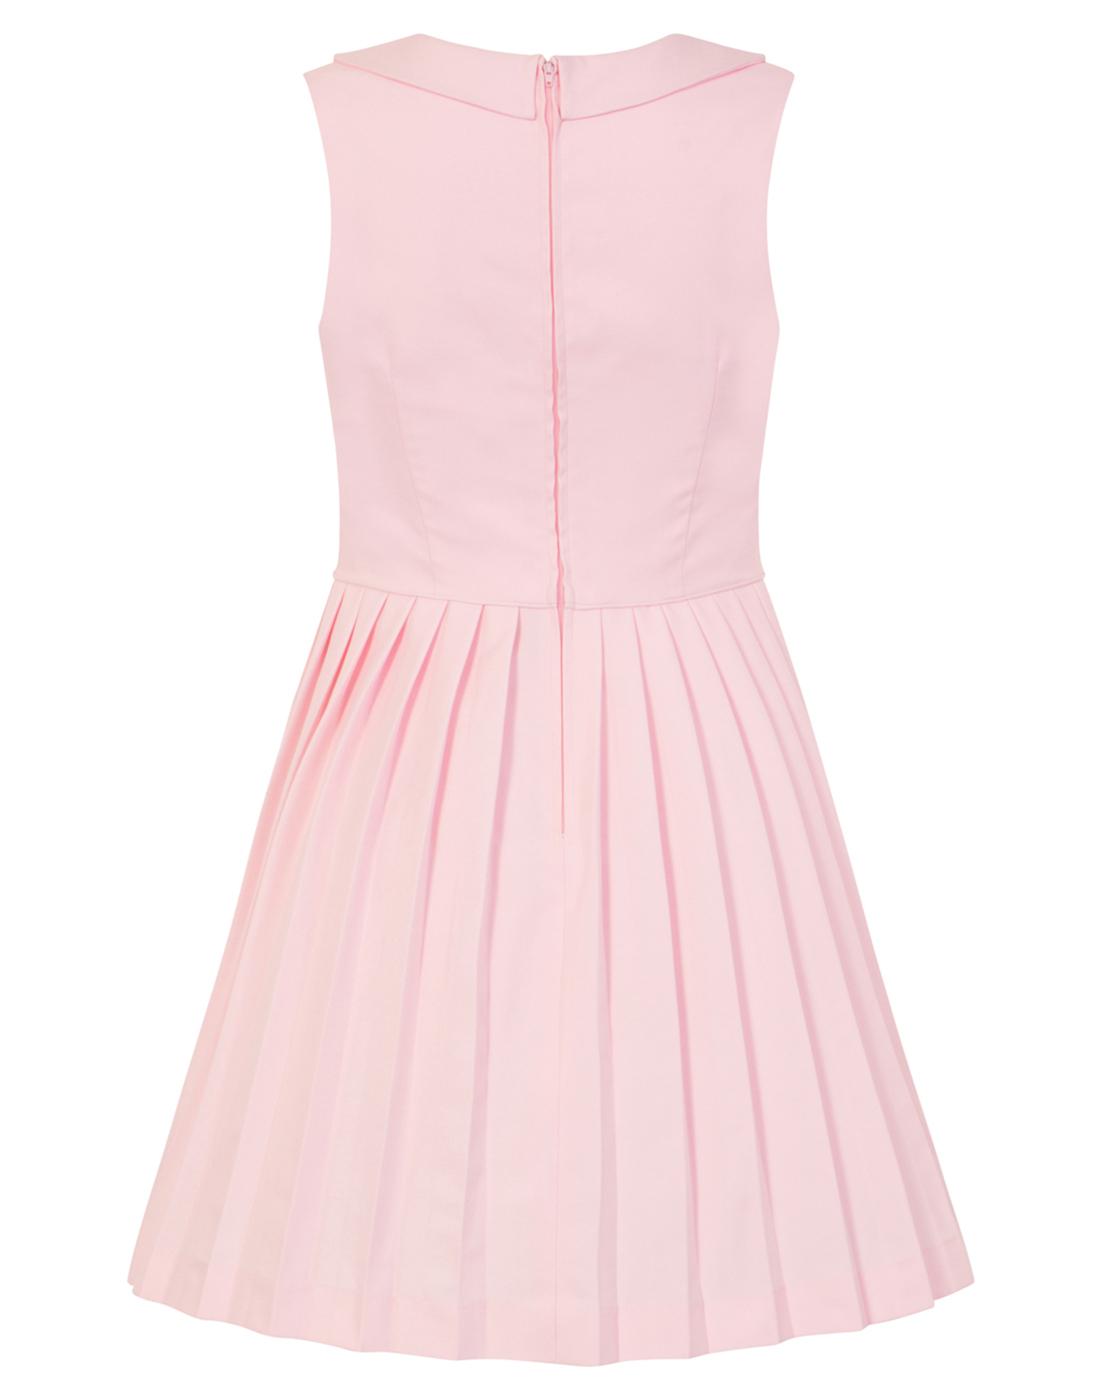 HELL BUNNY Josephine Retro 60s Mod Mini Dress in Pink